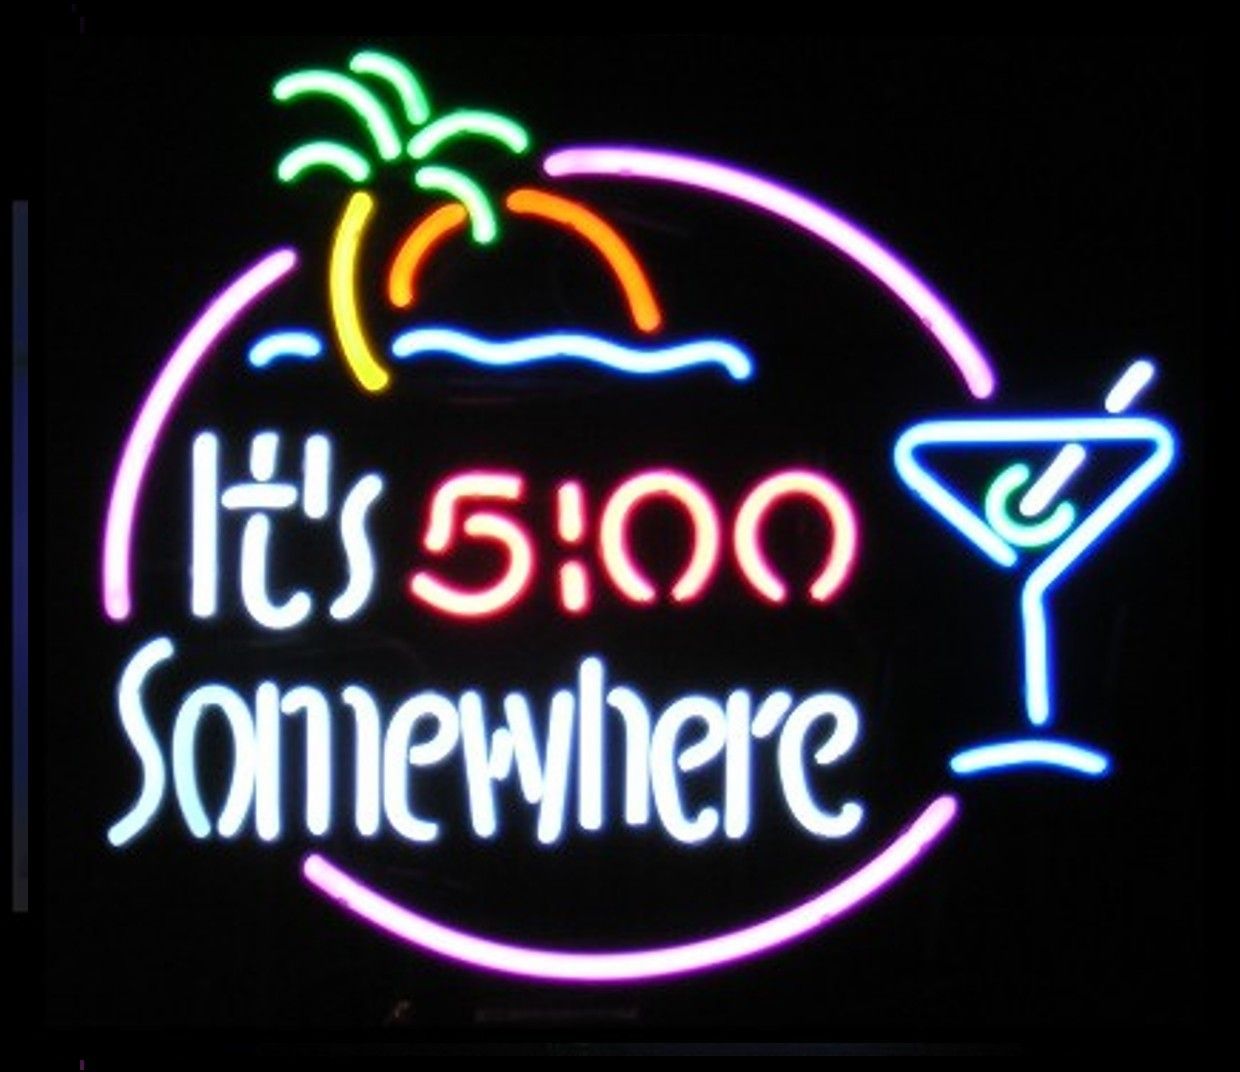 It's 5:00 Somewhere Neon Bar Sign - Team Spirit Store USA 